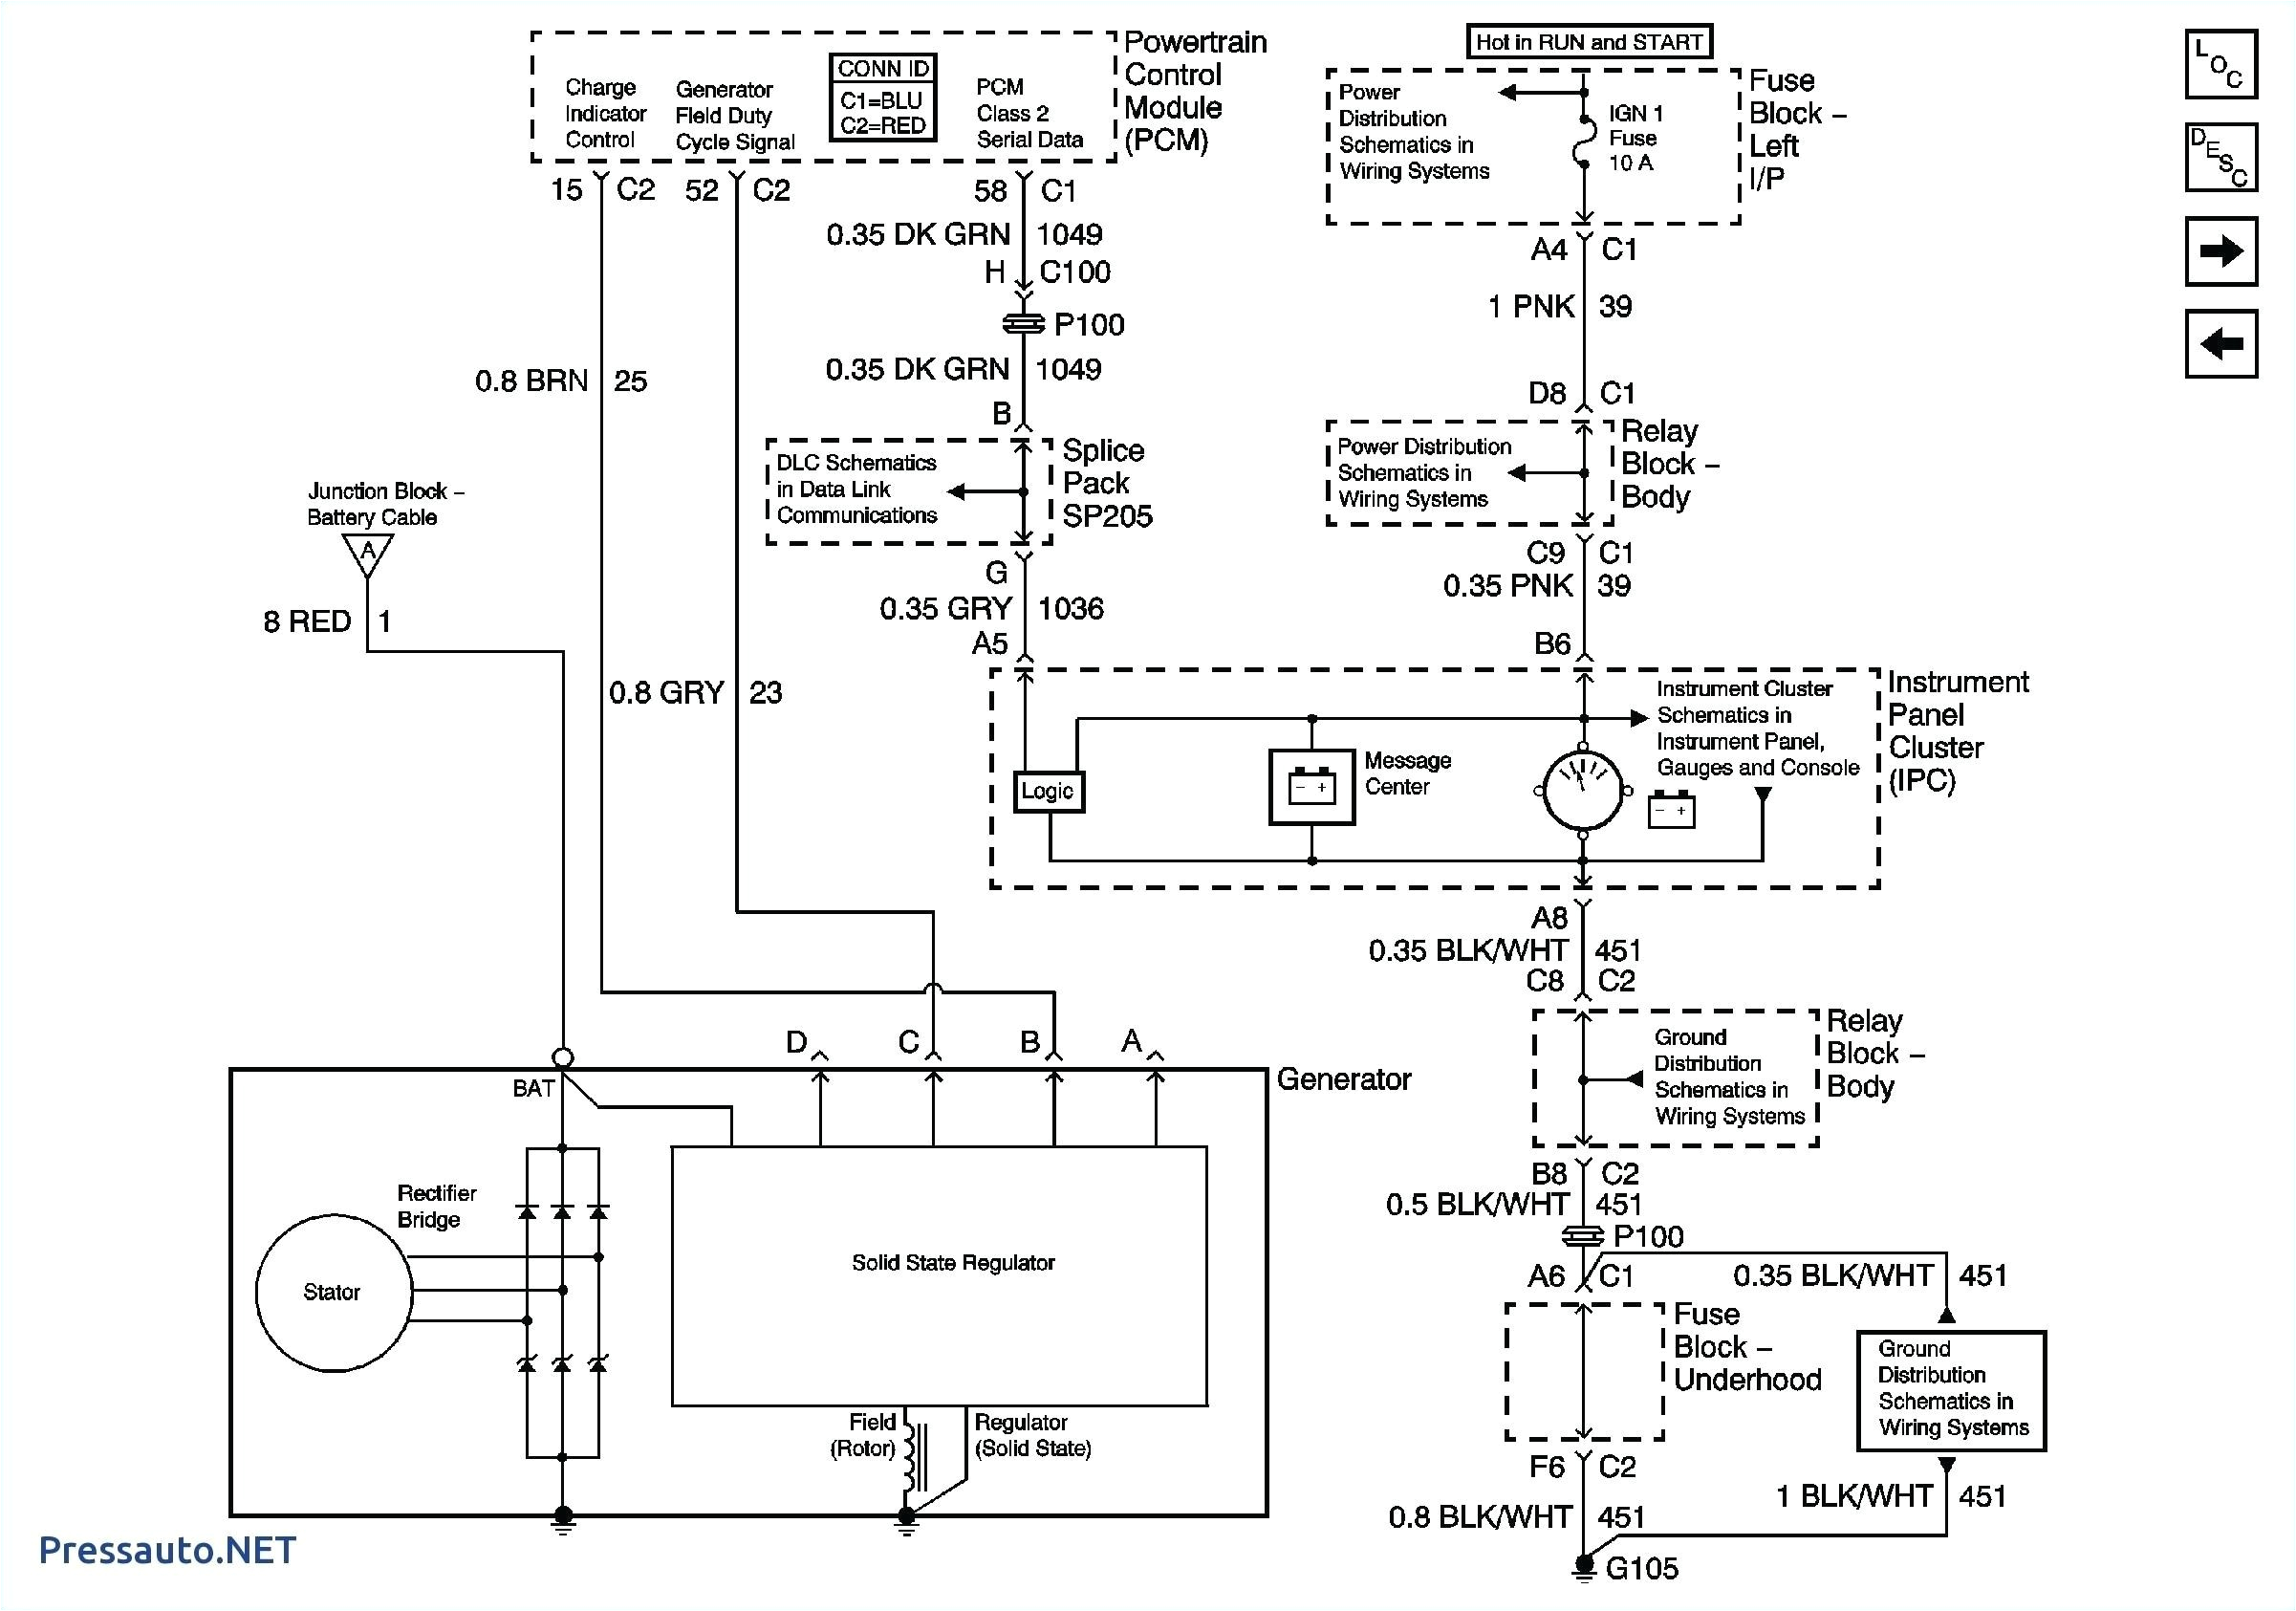 ach wiring diagram model 8 wiring diagrams recent schematic wiring diagram ach 088 wiring diagram centre